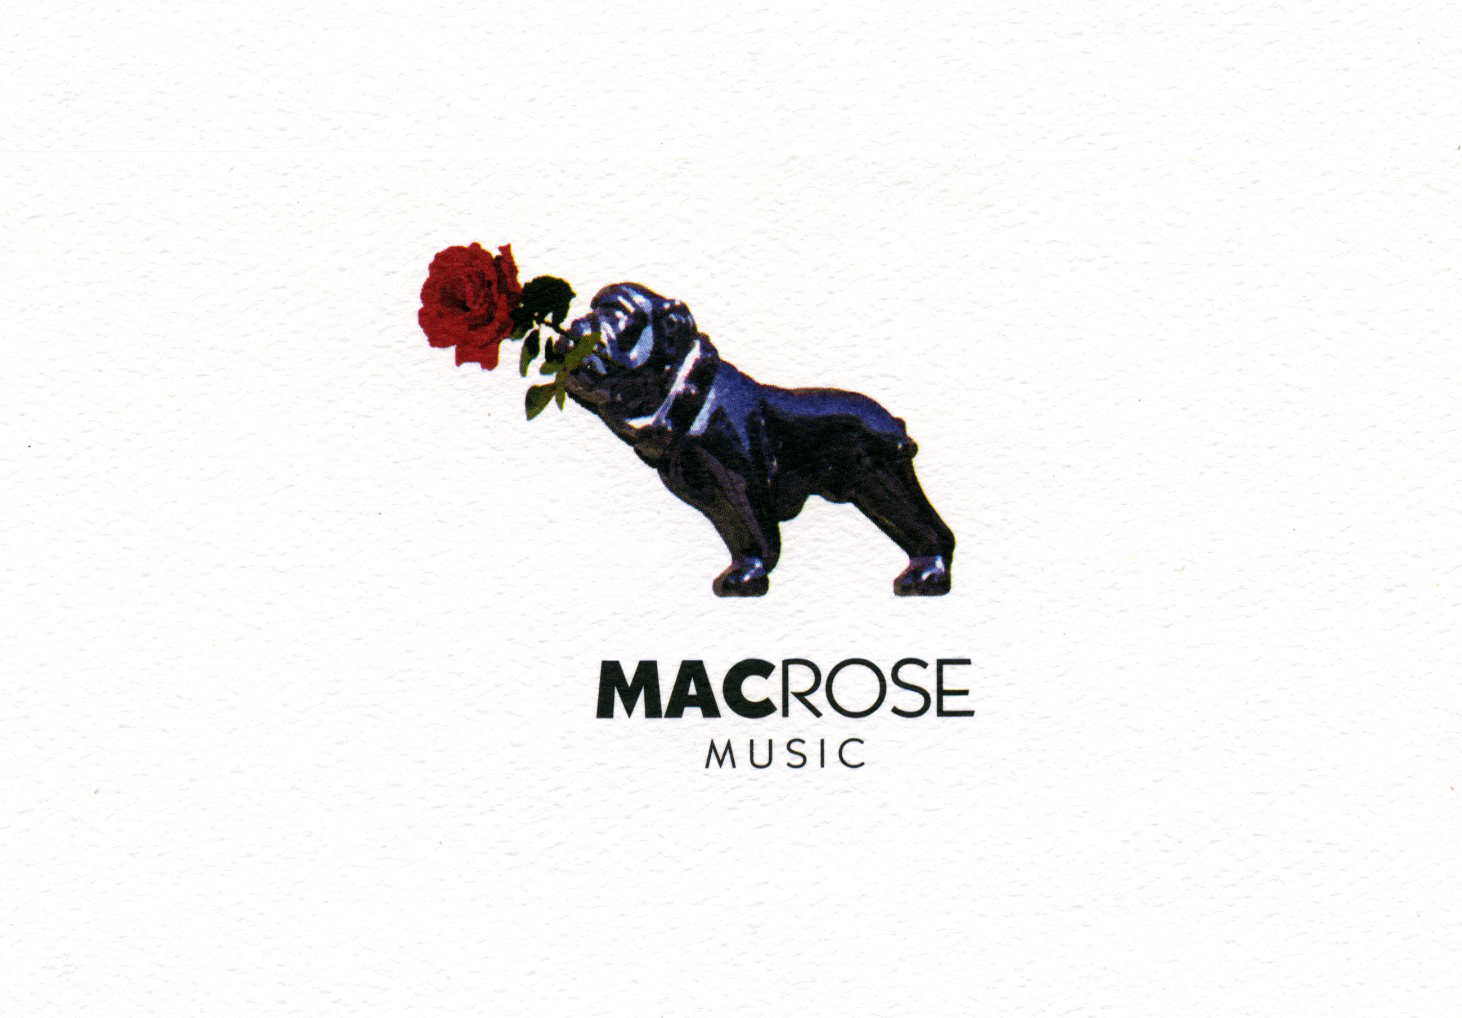 Macrose music logo.jpg